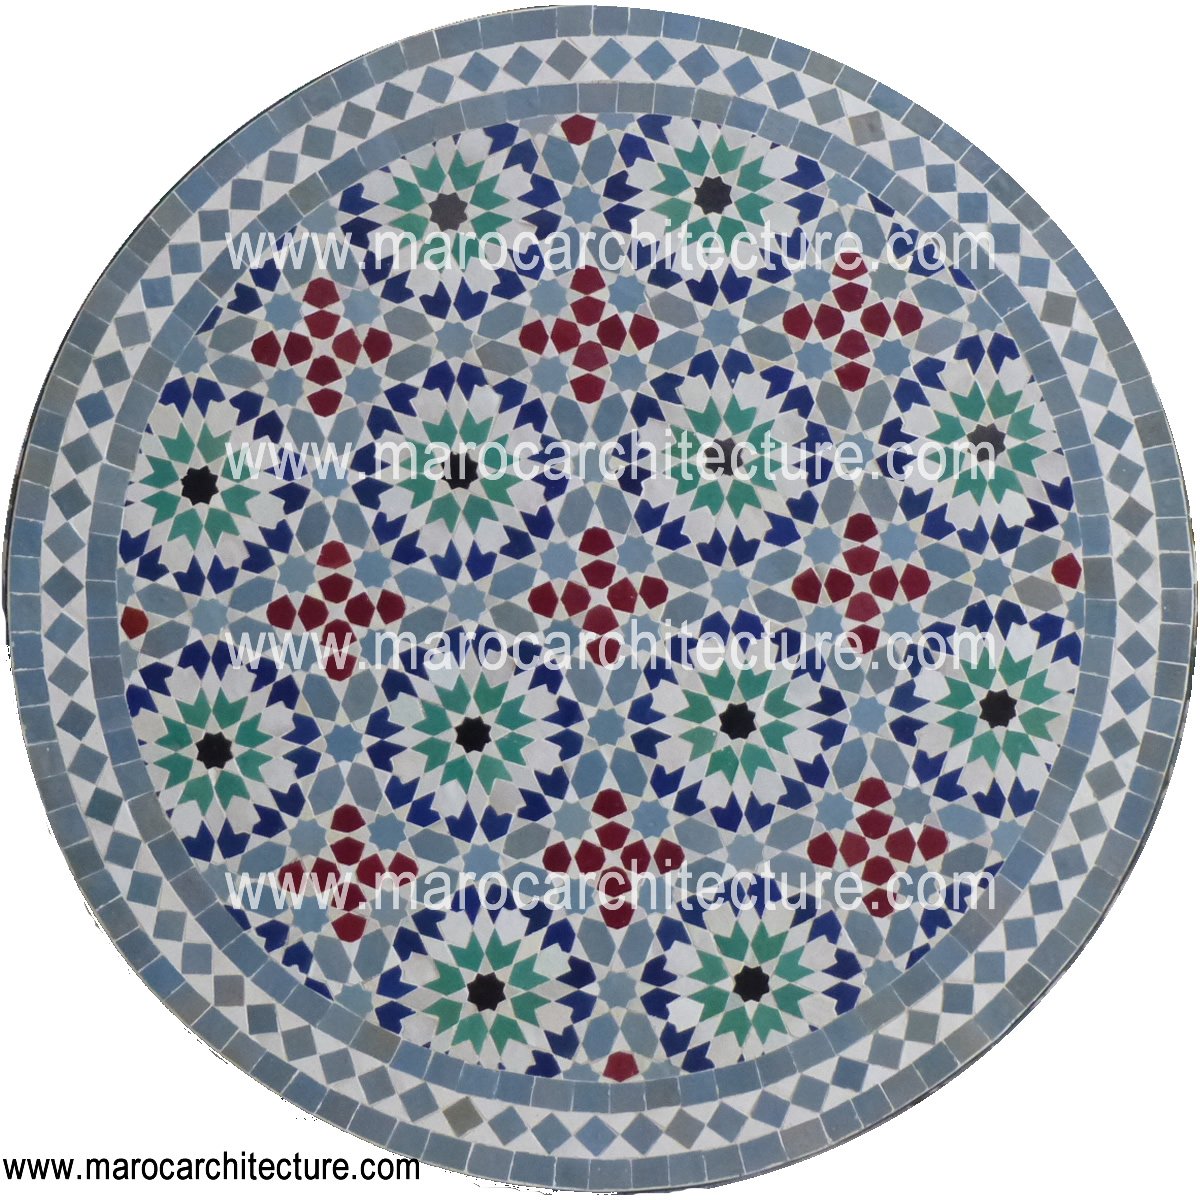 Mosaic Table 1902